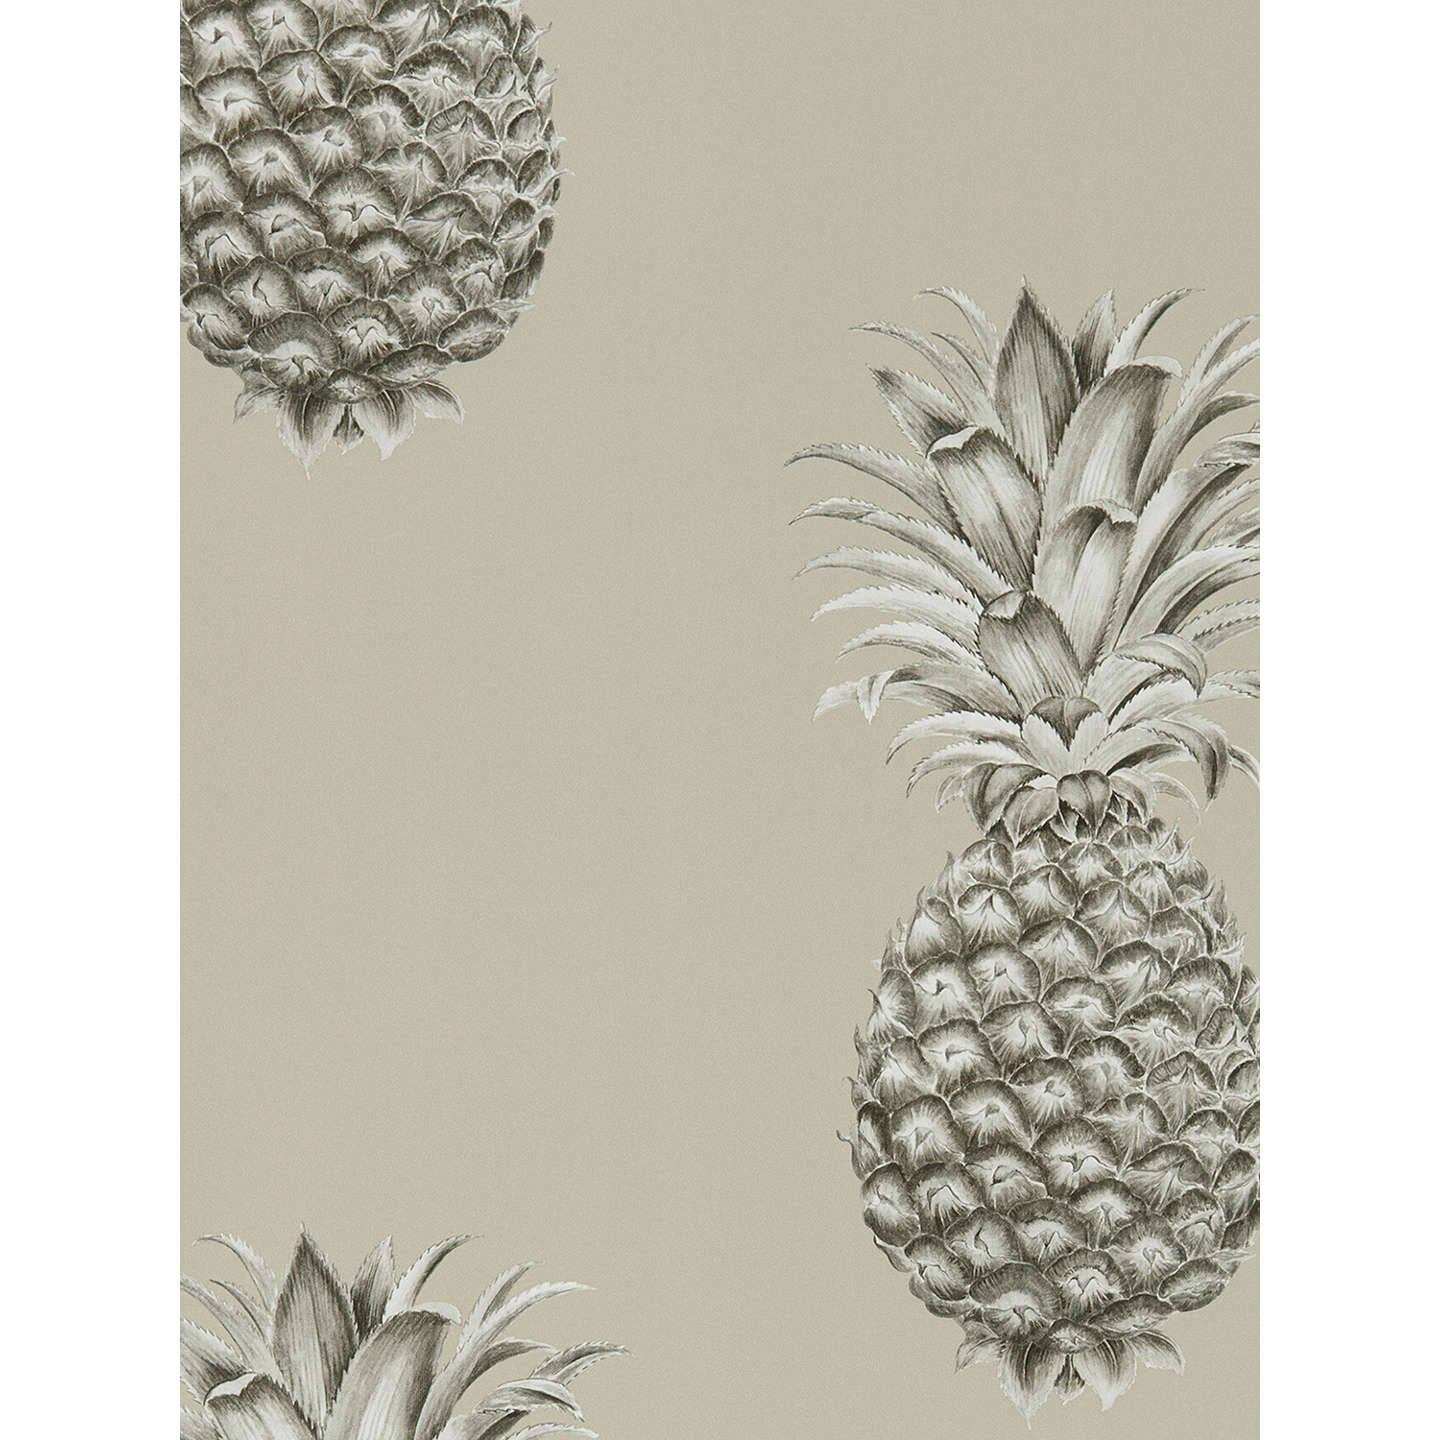 Pineapple Art Light Brown Wallpaper